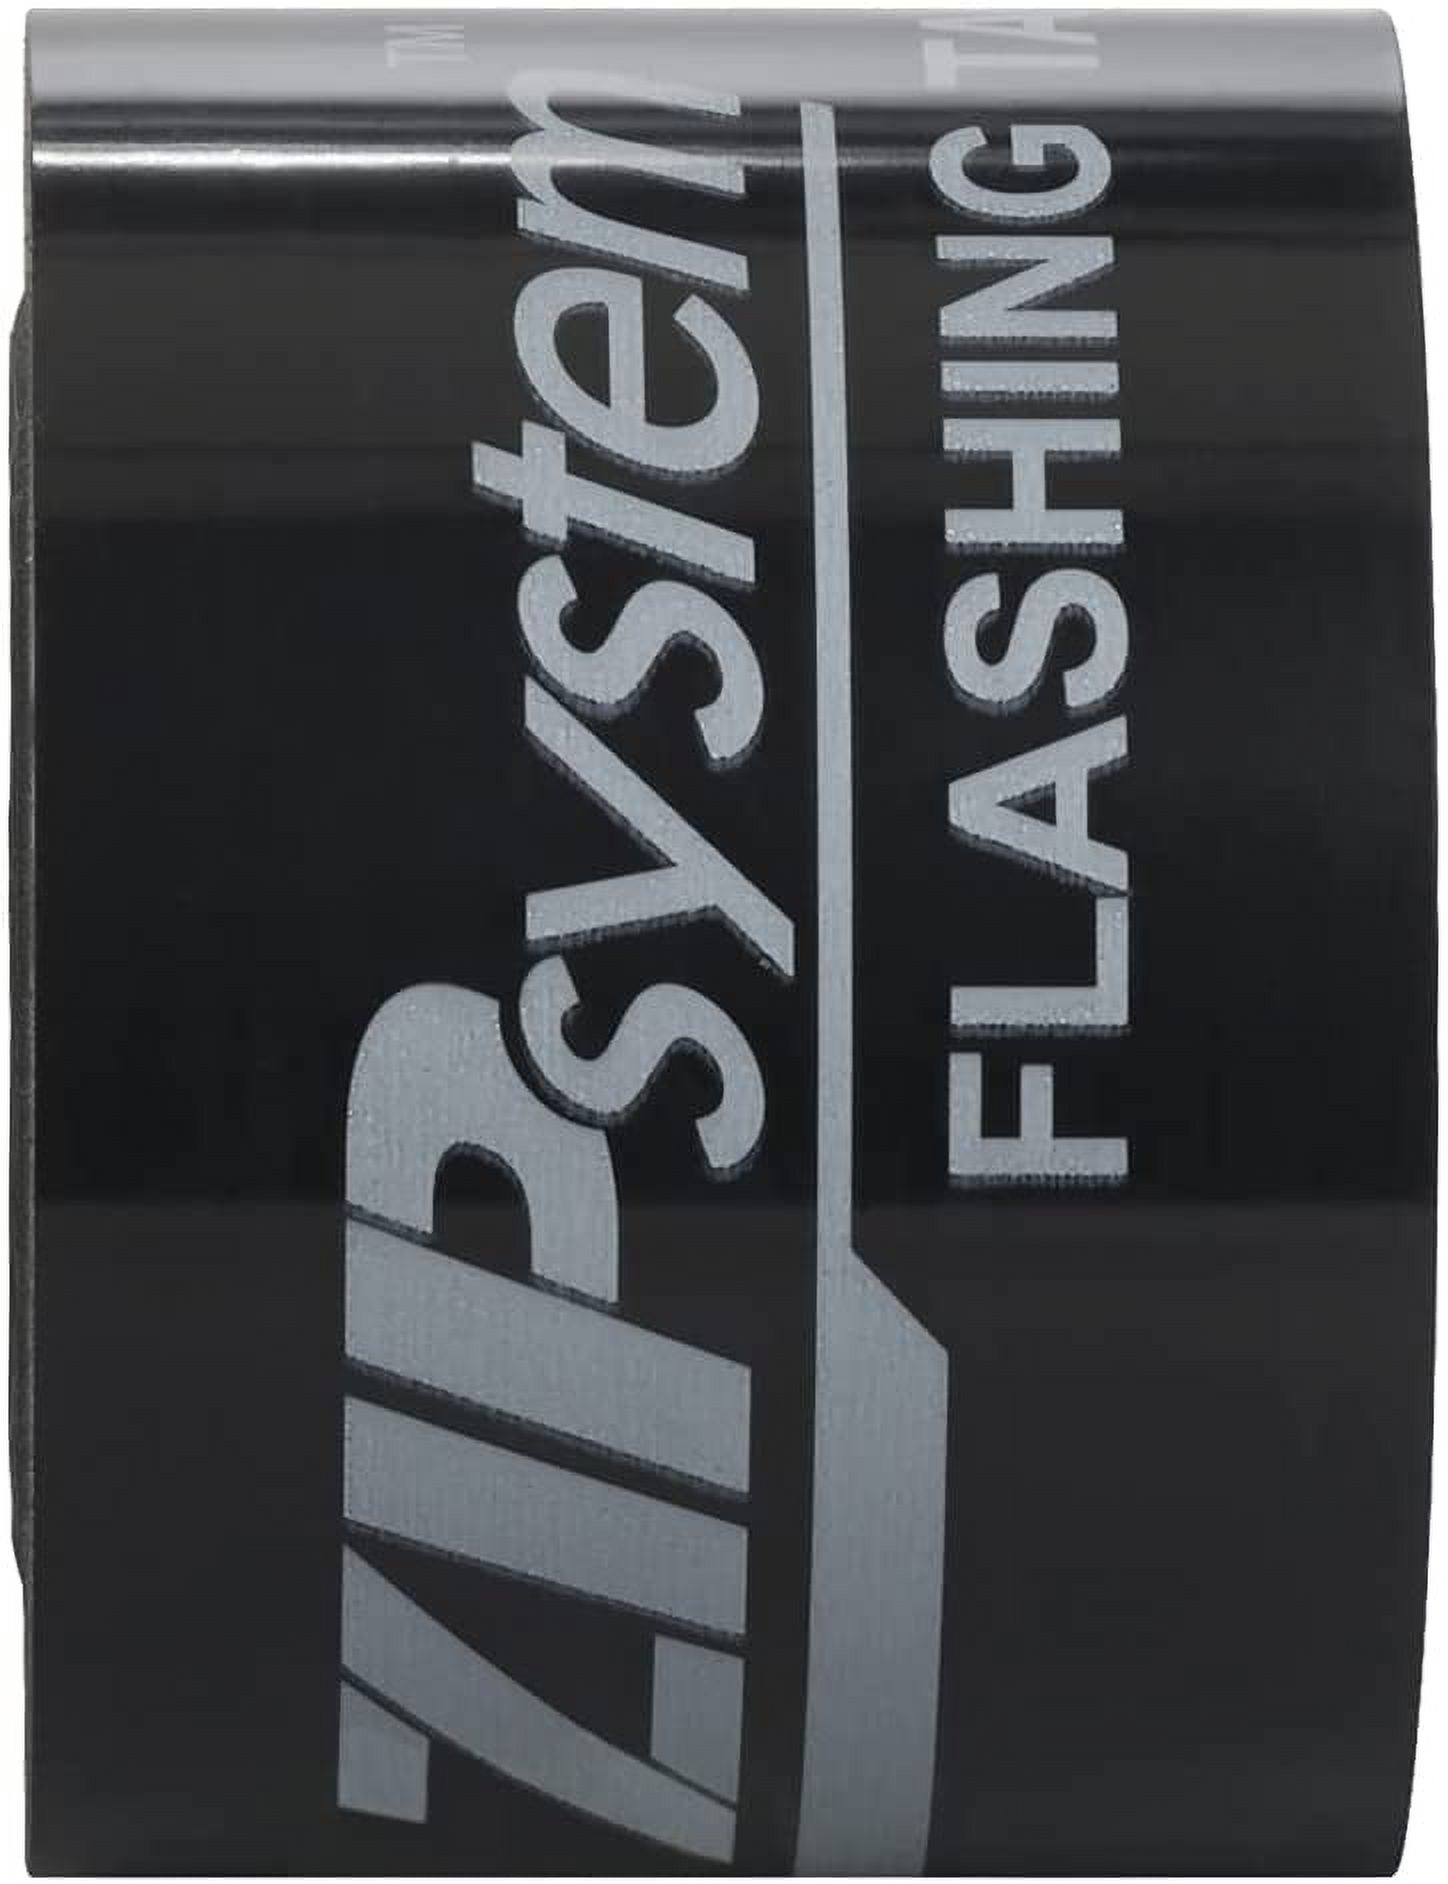 Huber Zip System Self-Adhesive 3.75 in x 90 ft Flashing Tape